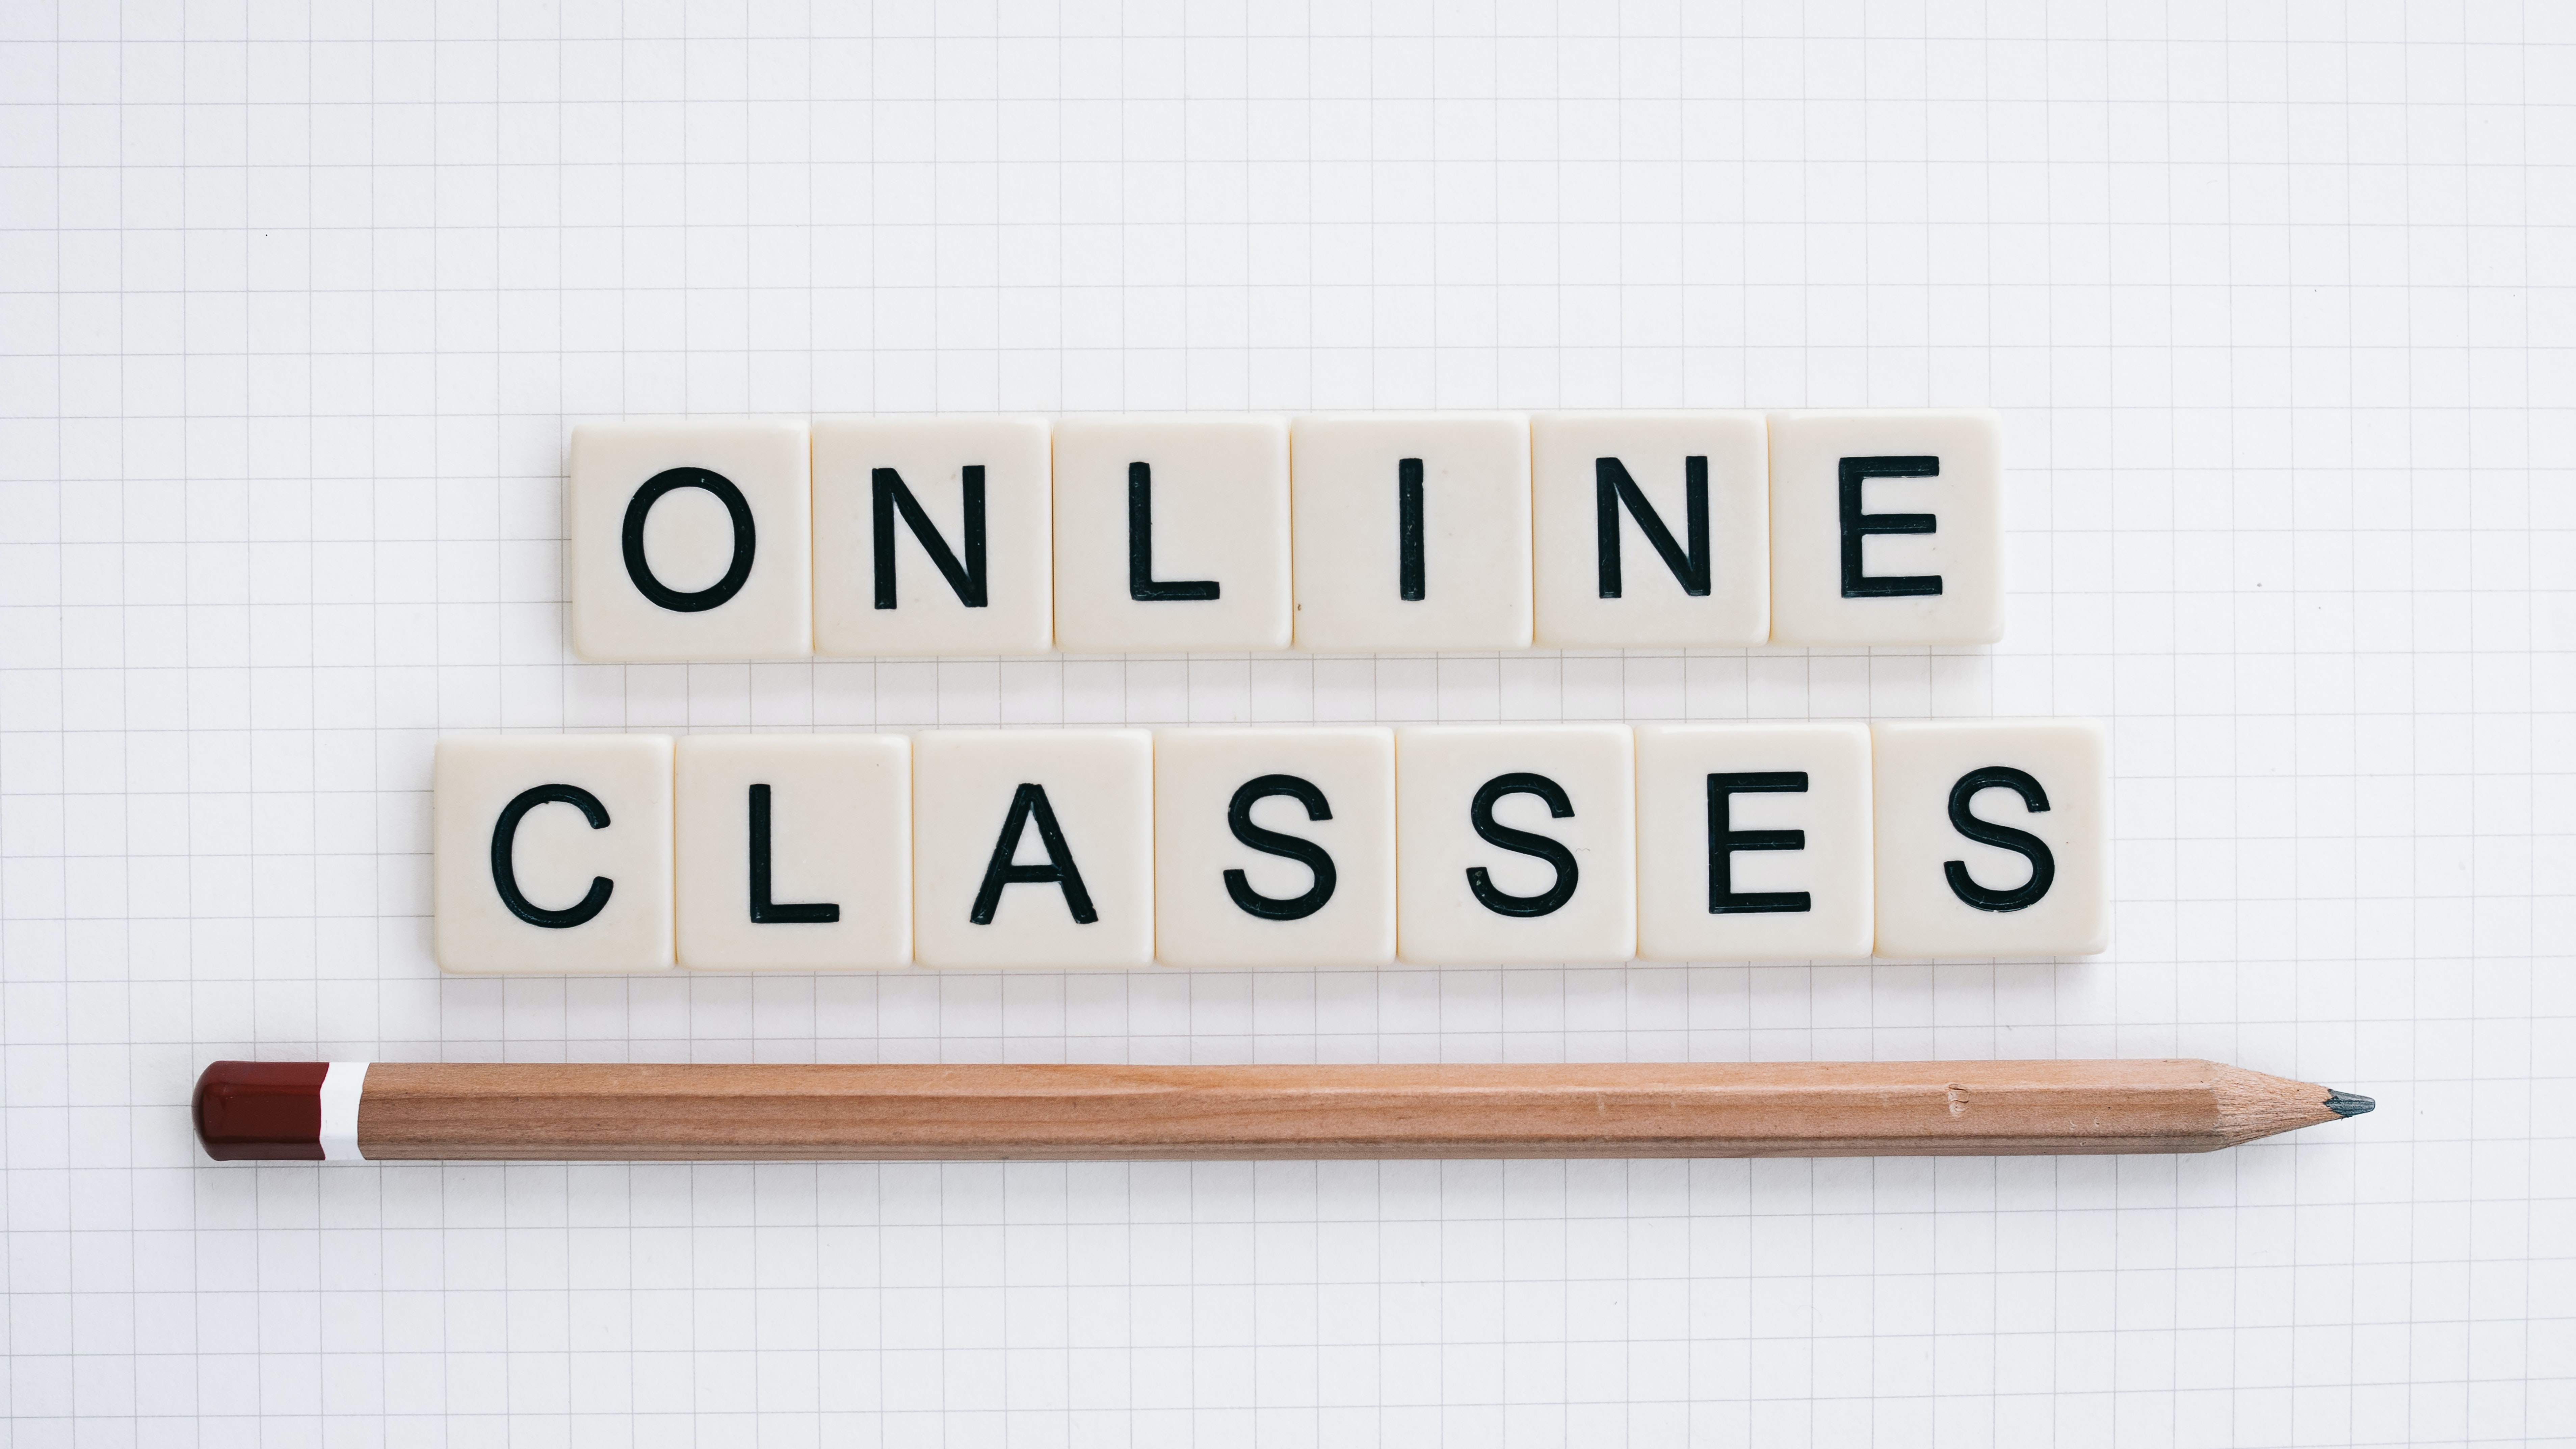 scrabble letters spelling "online classes"